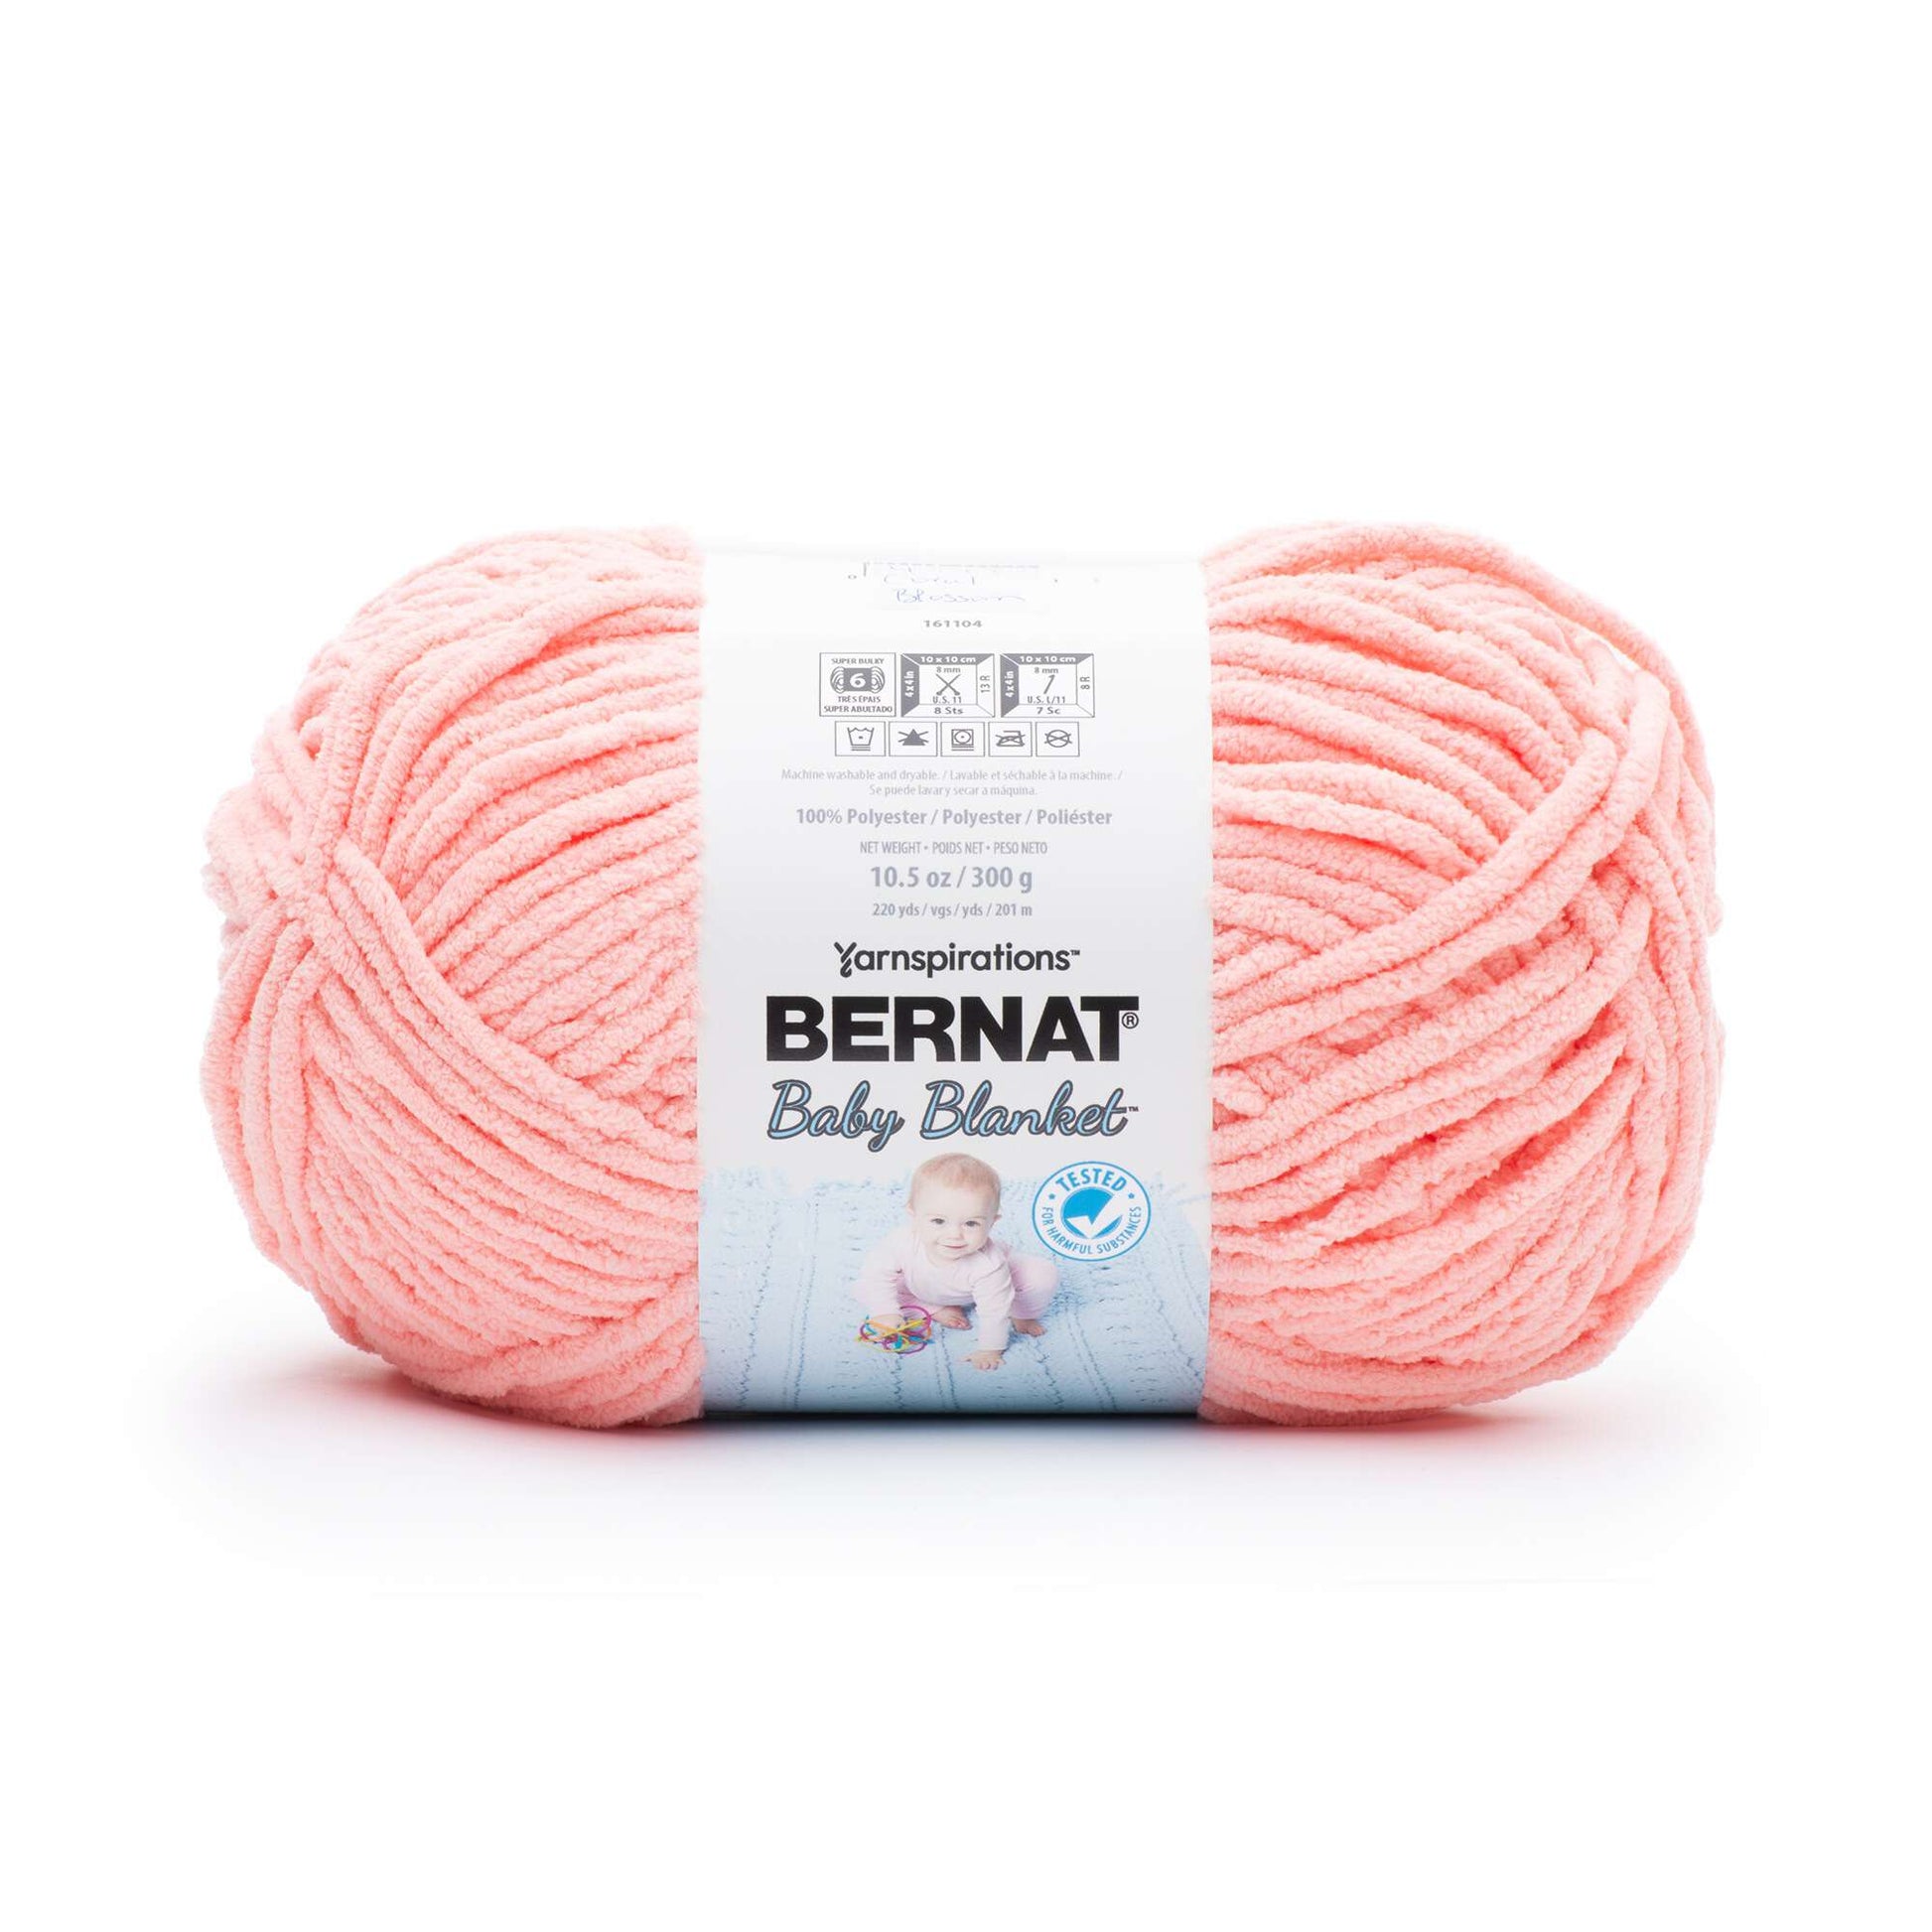 Yarnspirations Bernat Baby Blanket Yarn 10.5 oz. 220 yds. 8